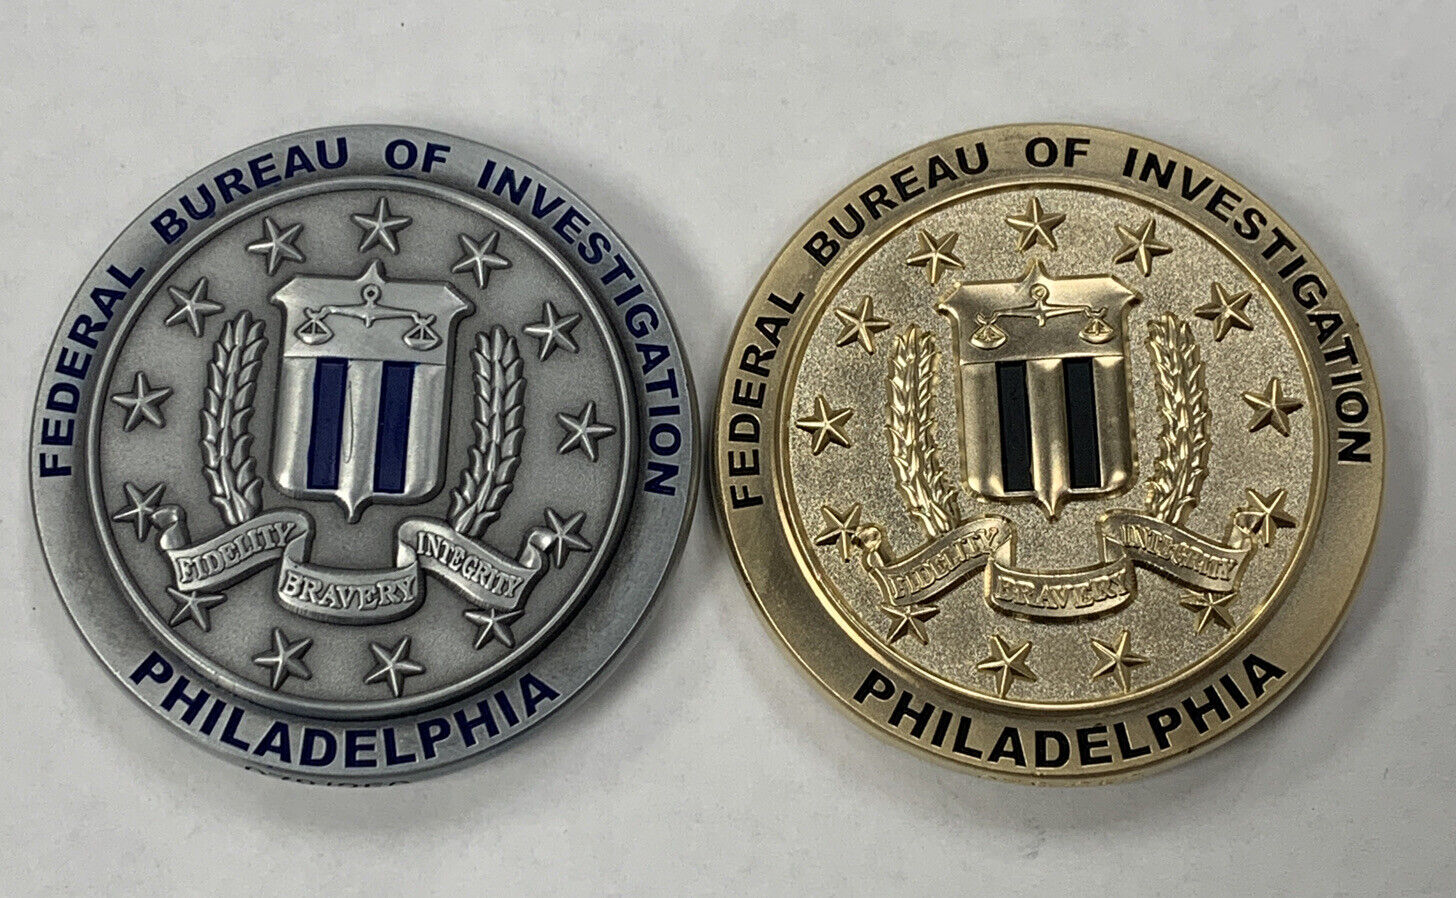 2 FBI Philadelphia Division Challenge Coins - Serialized